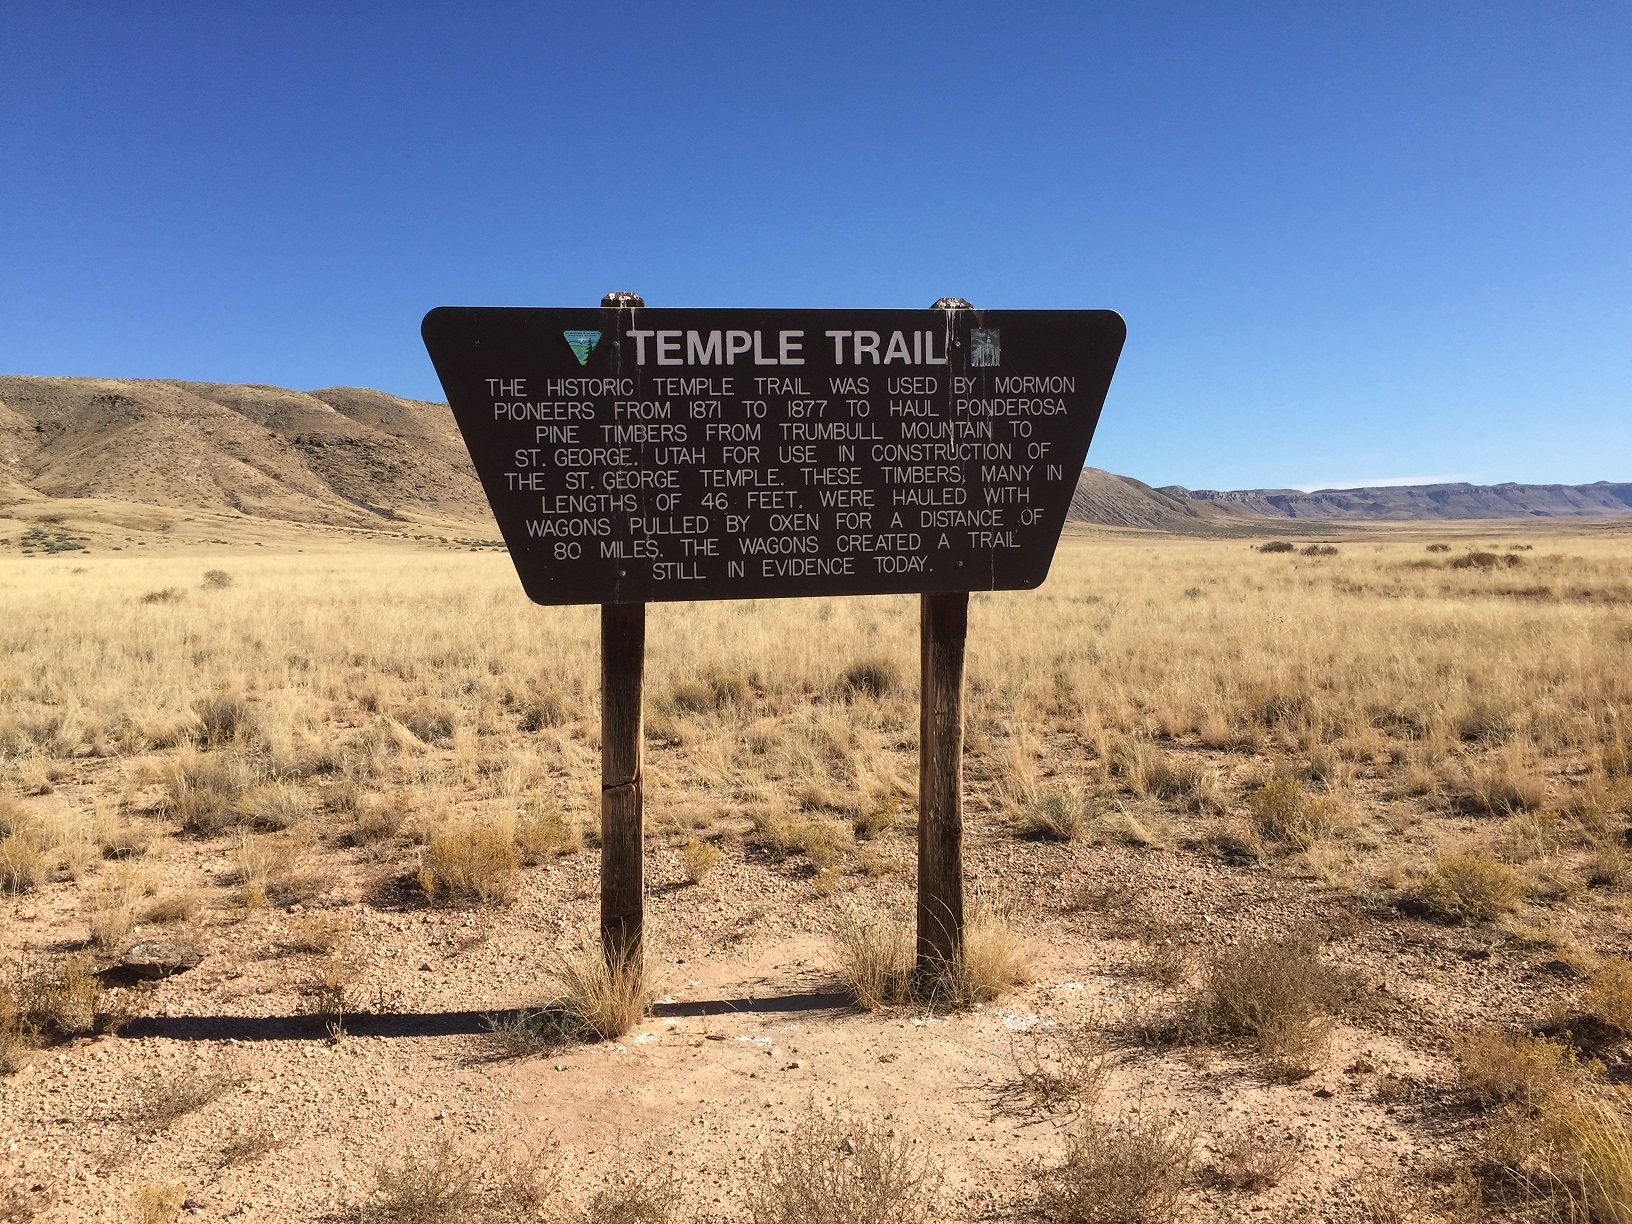 A big Temple Trail interpretive sign